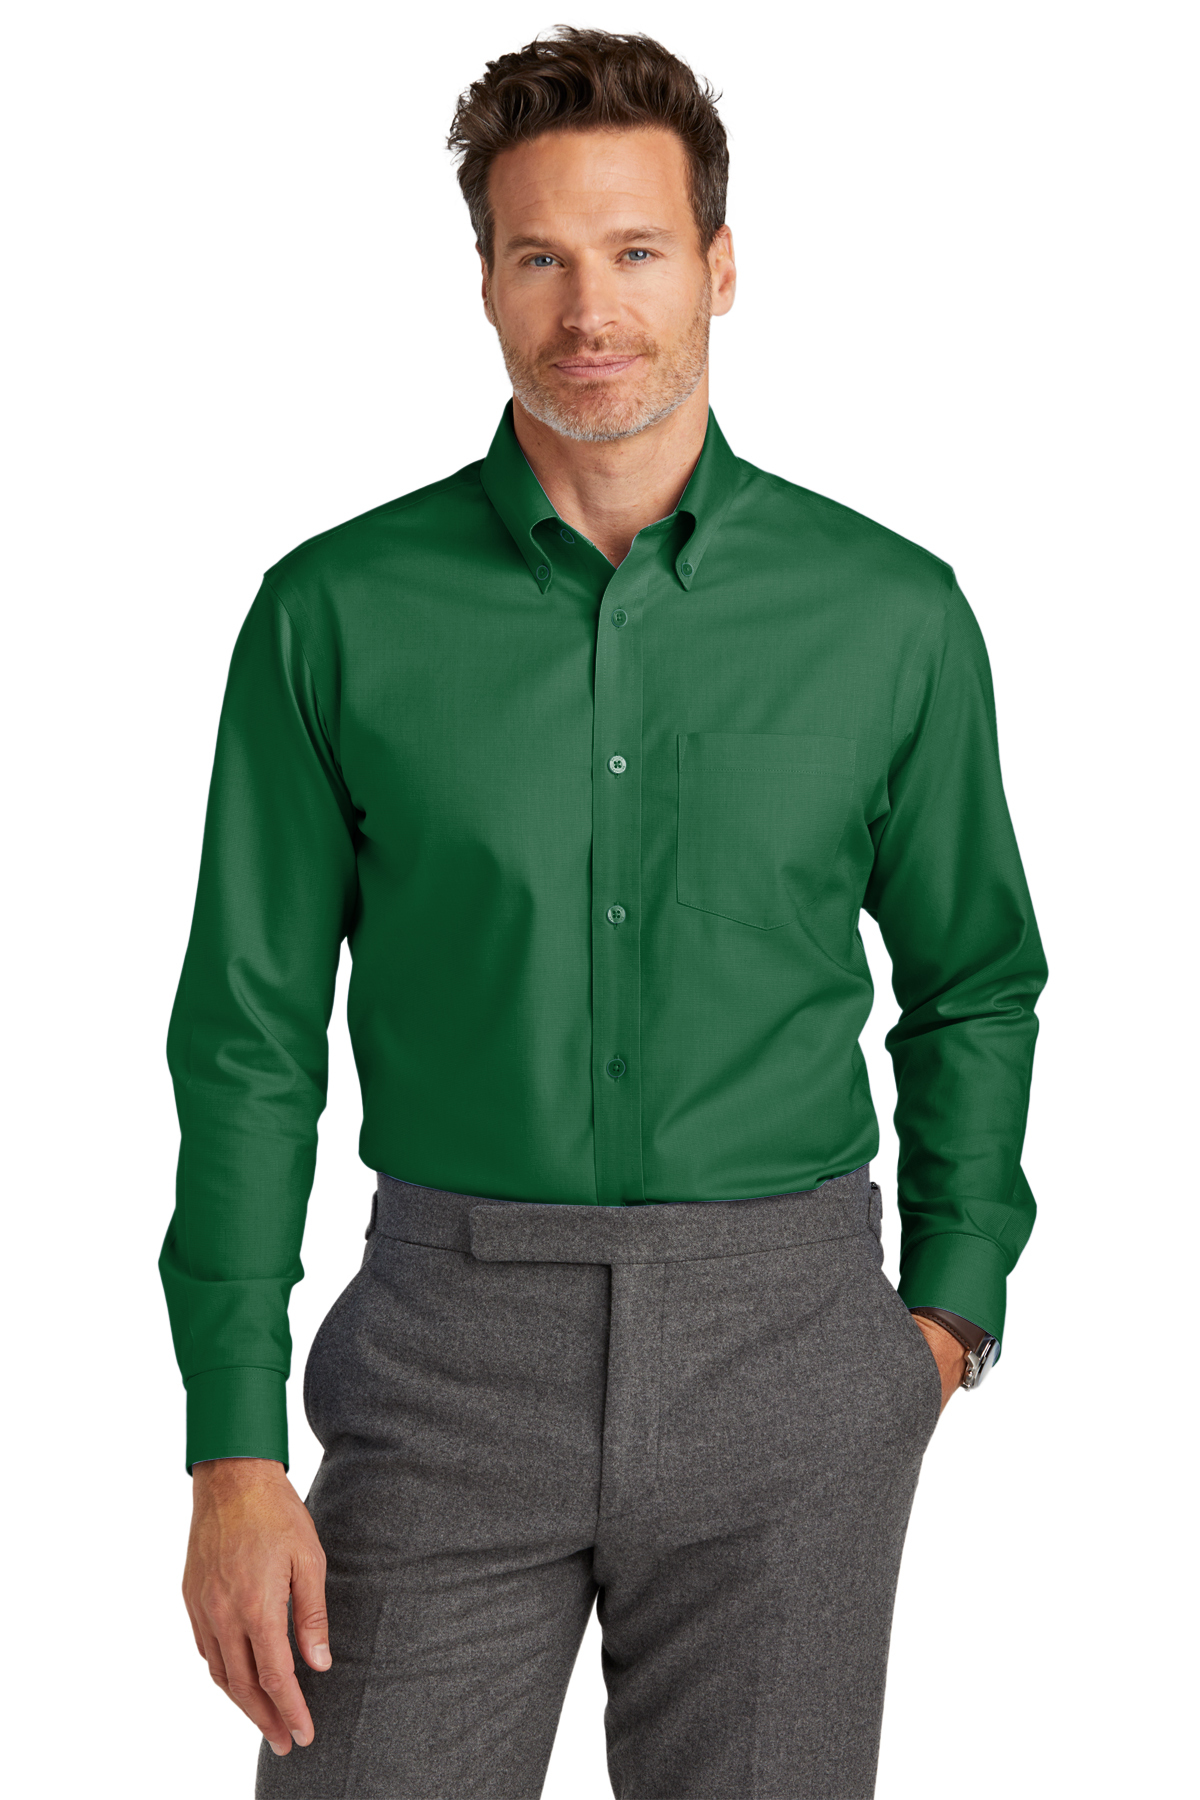 Brooks Brothers Wrinkle-Free Stretch Nailhead Shirt | Product | Company ...